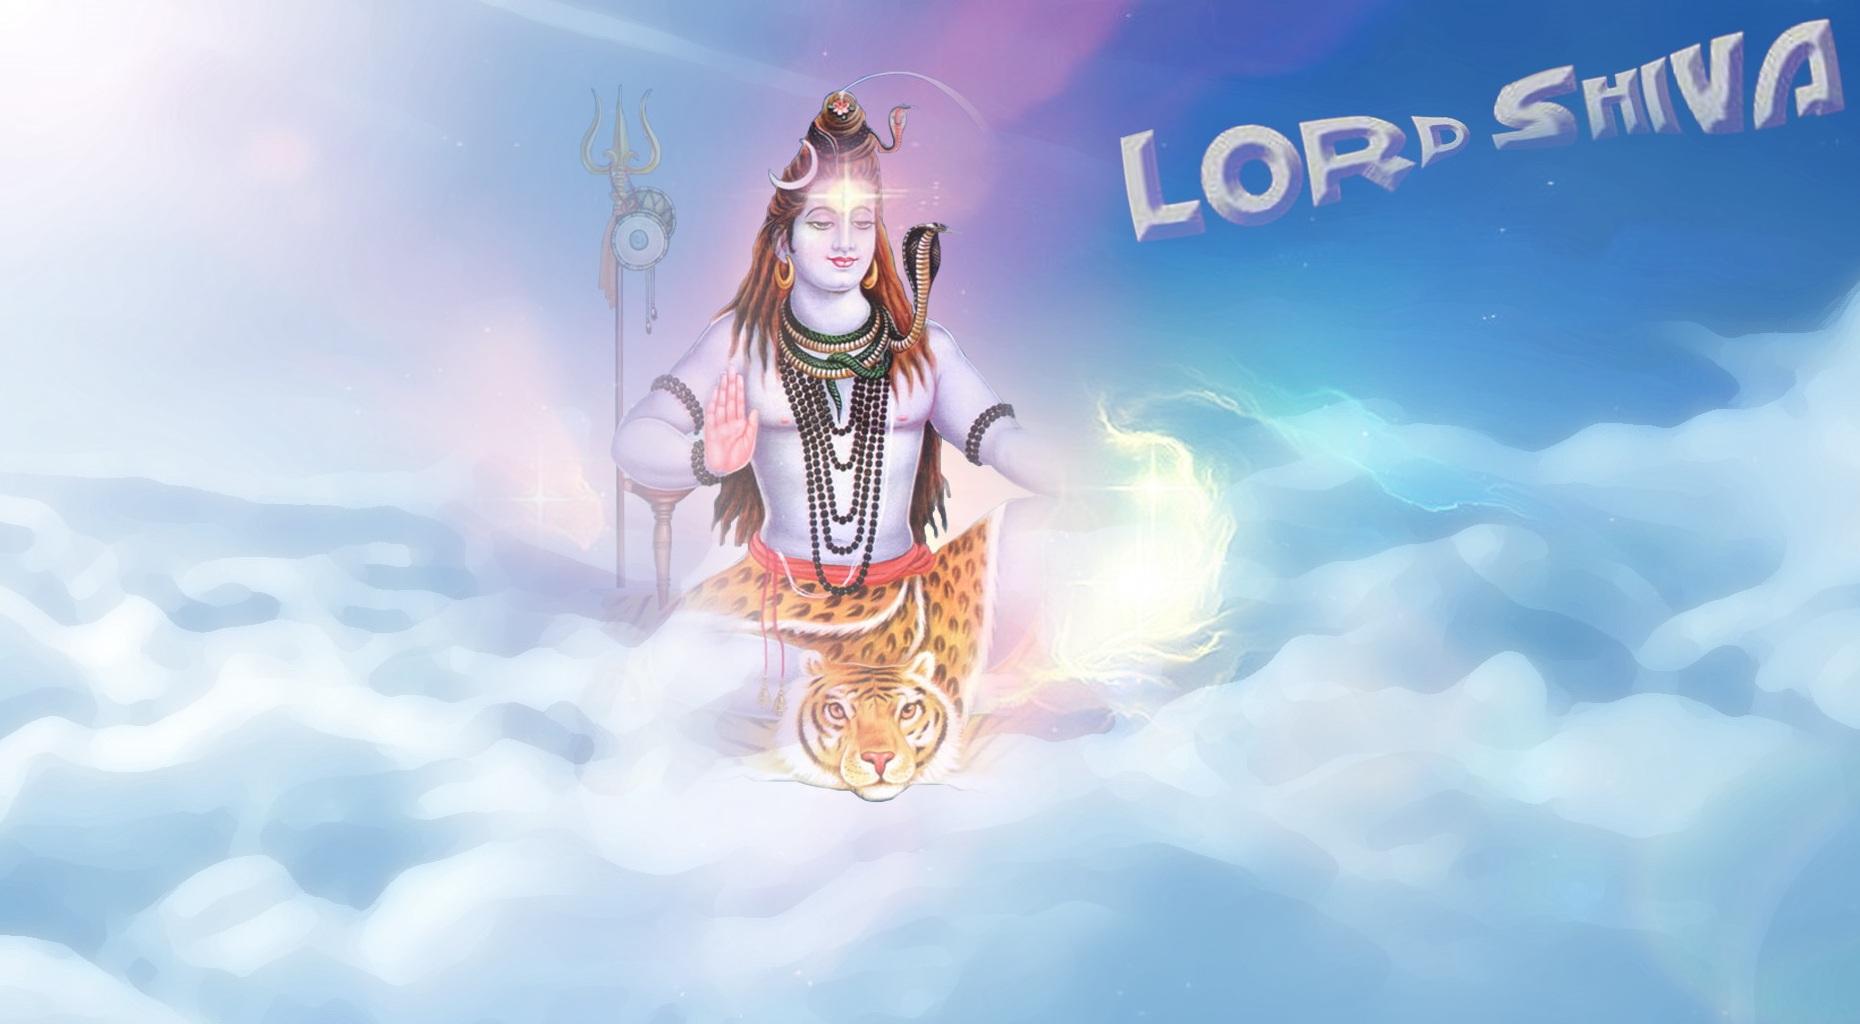 Lord Shiva Image [Wallpaper] & God Shiva Photo in HD